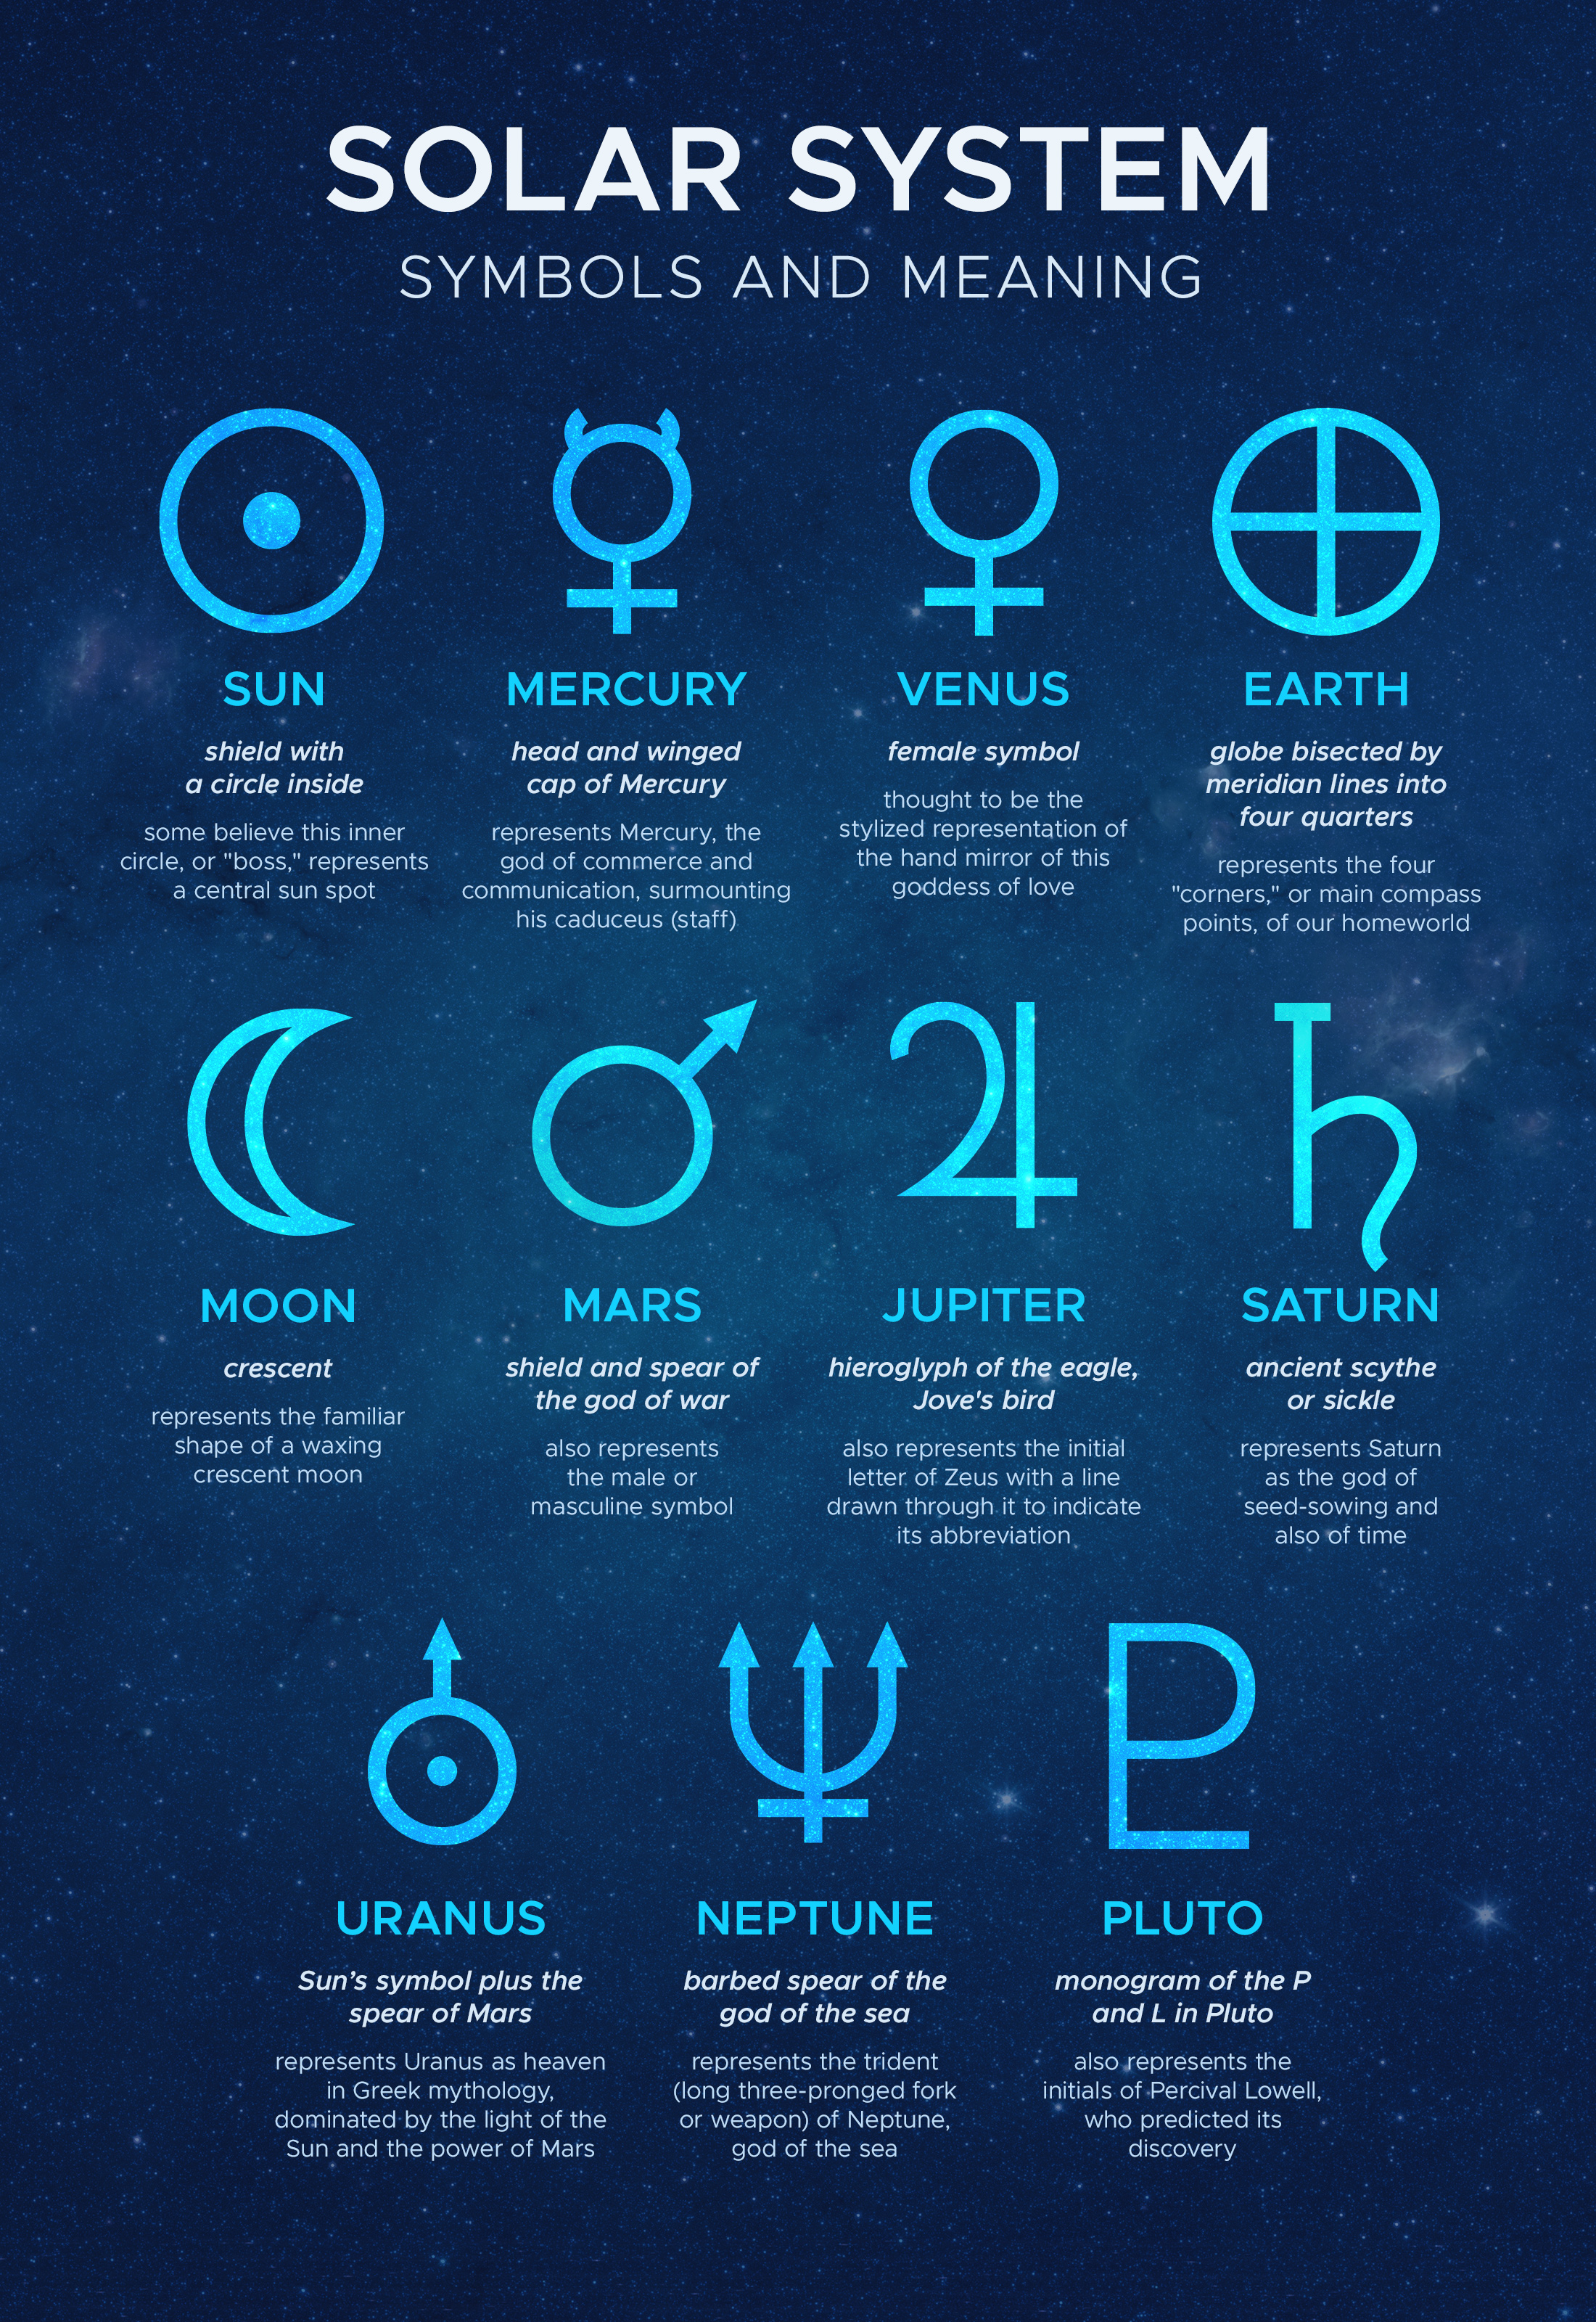 planet symbols from nasa